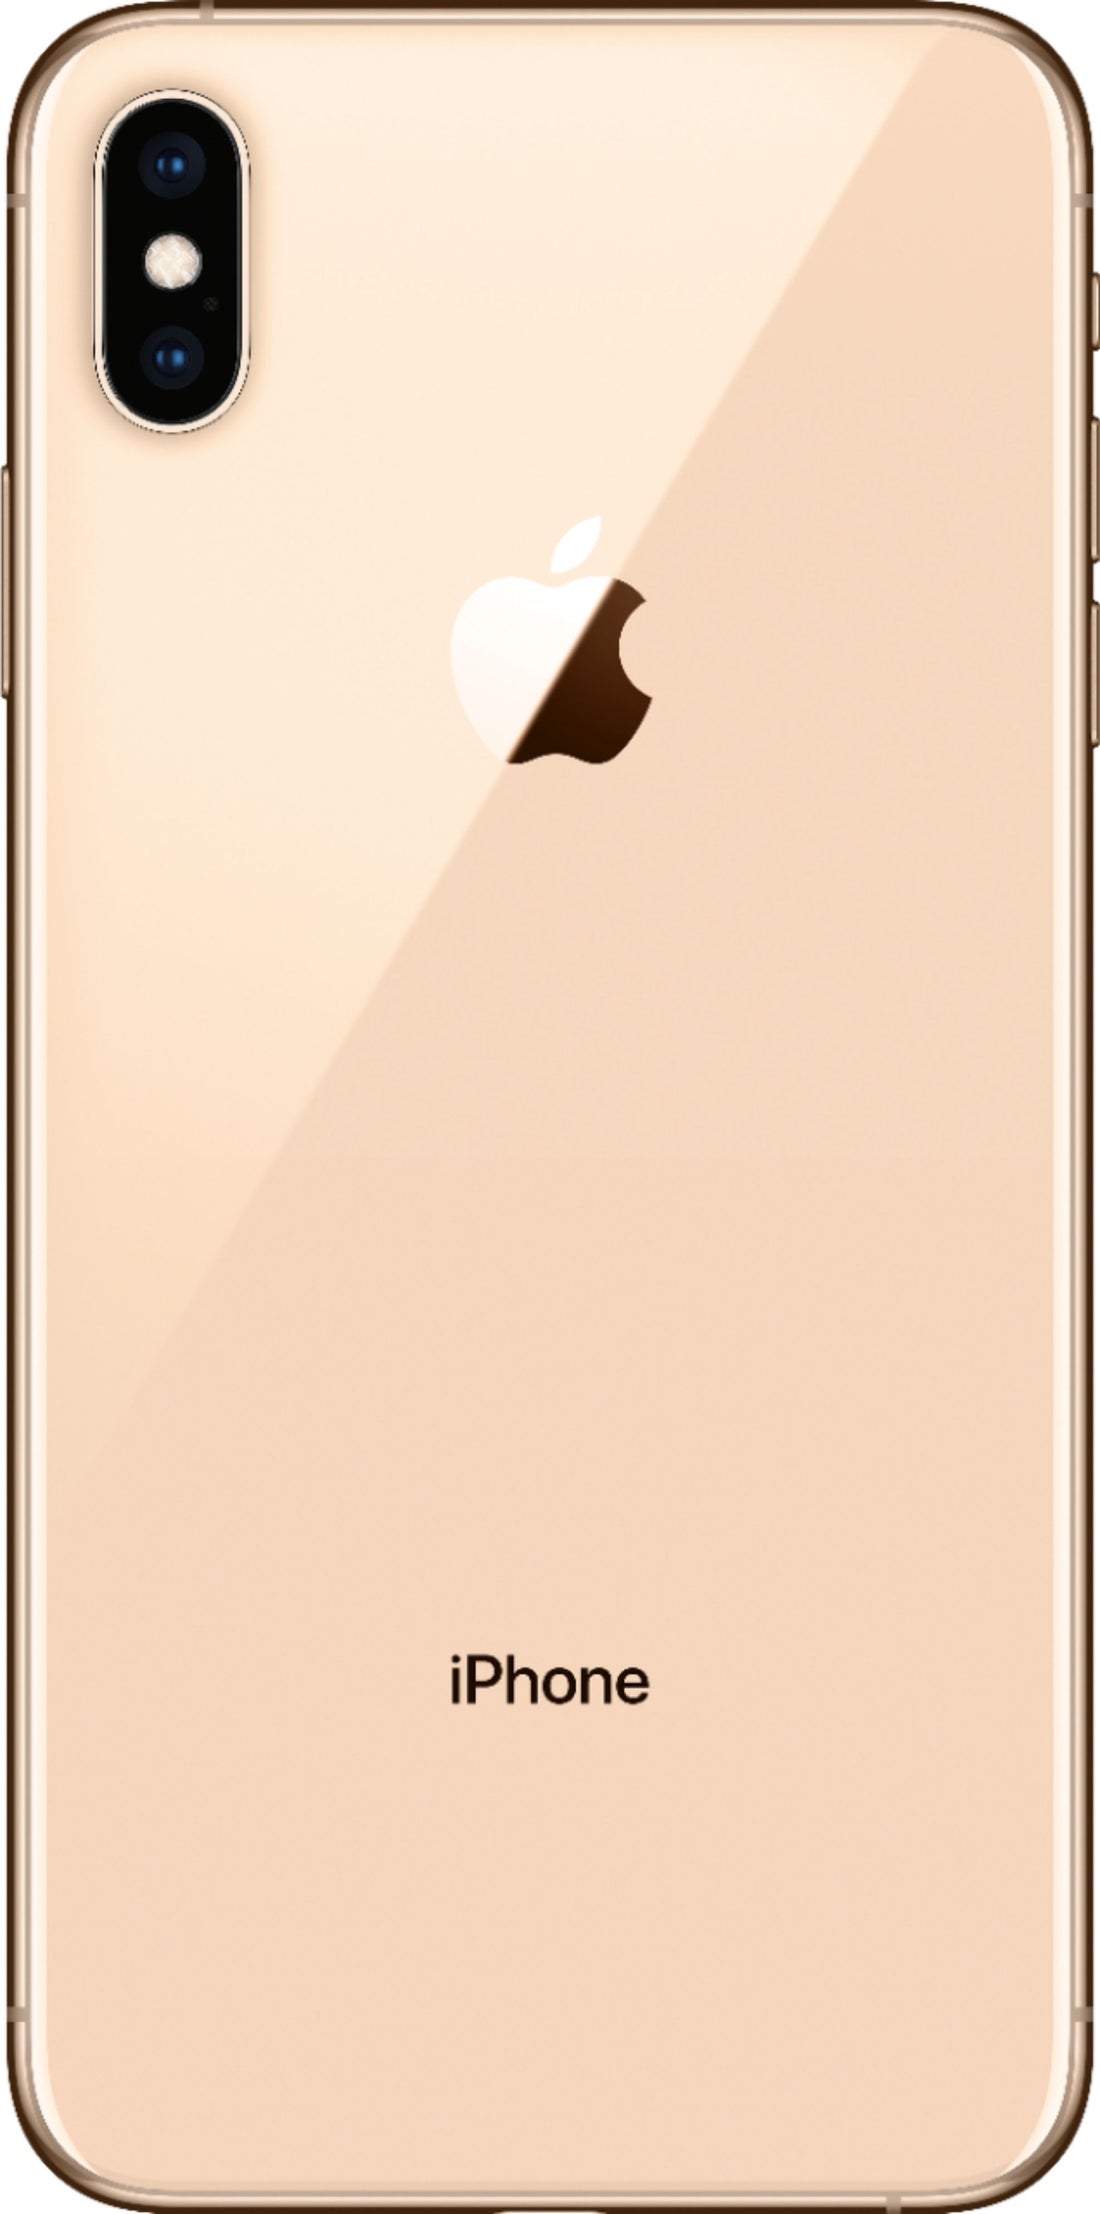 Apple iPhone XS Max 256GB (Unlocked) - Gold (Used)